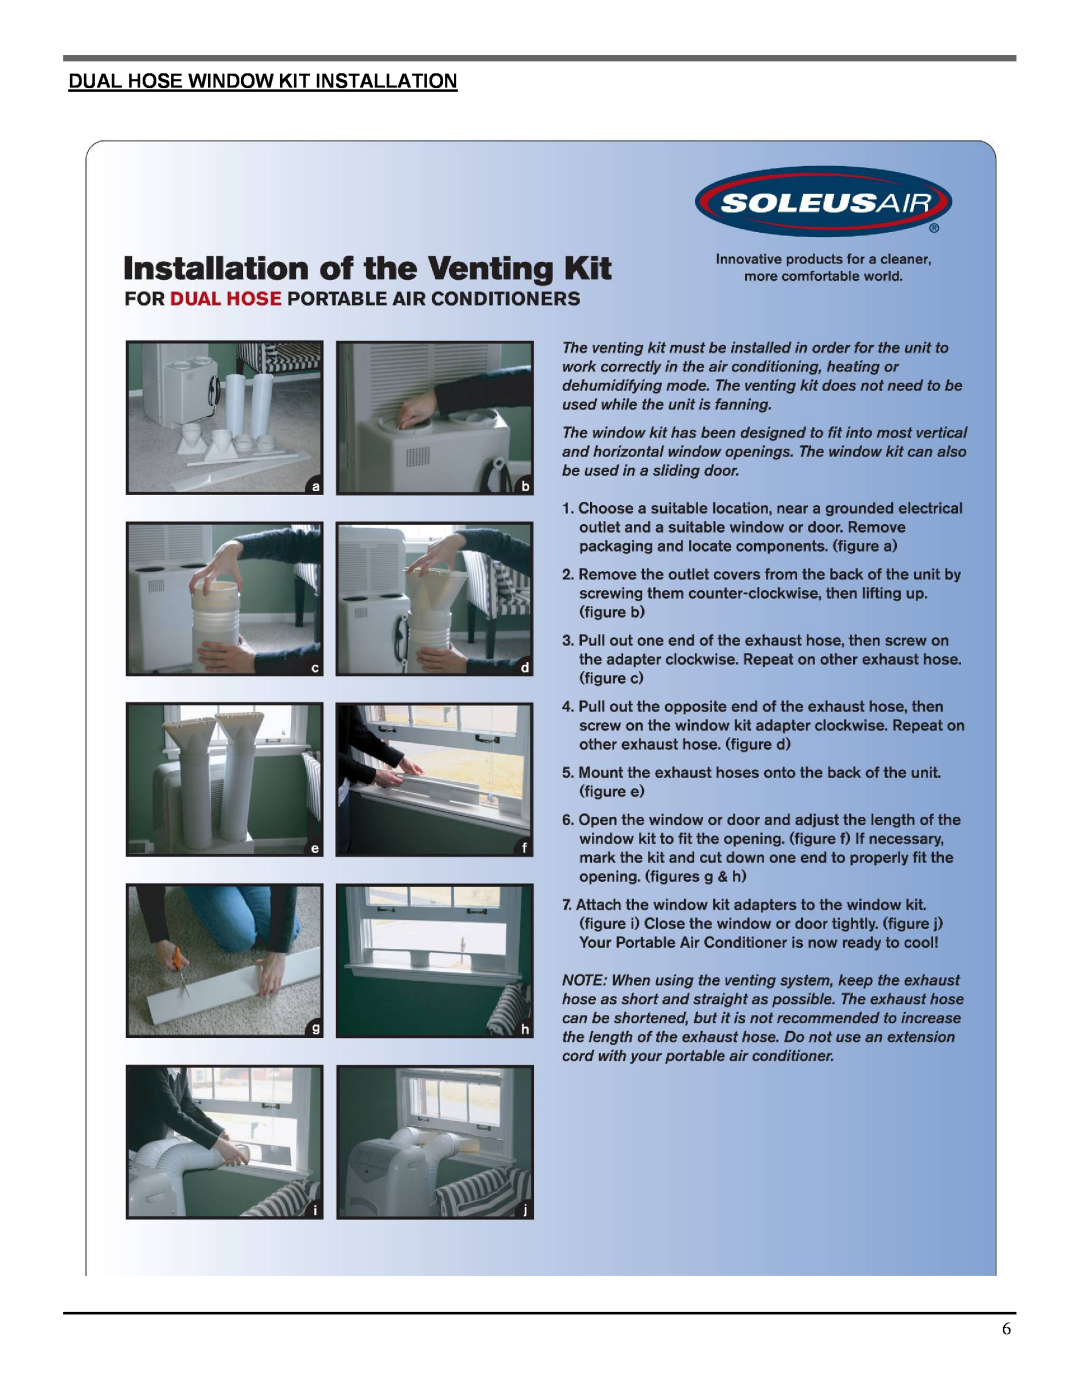 NewAir LX-100 manual Dual Hose Window Kit Installation 